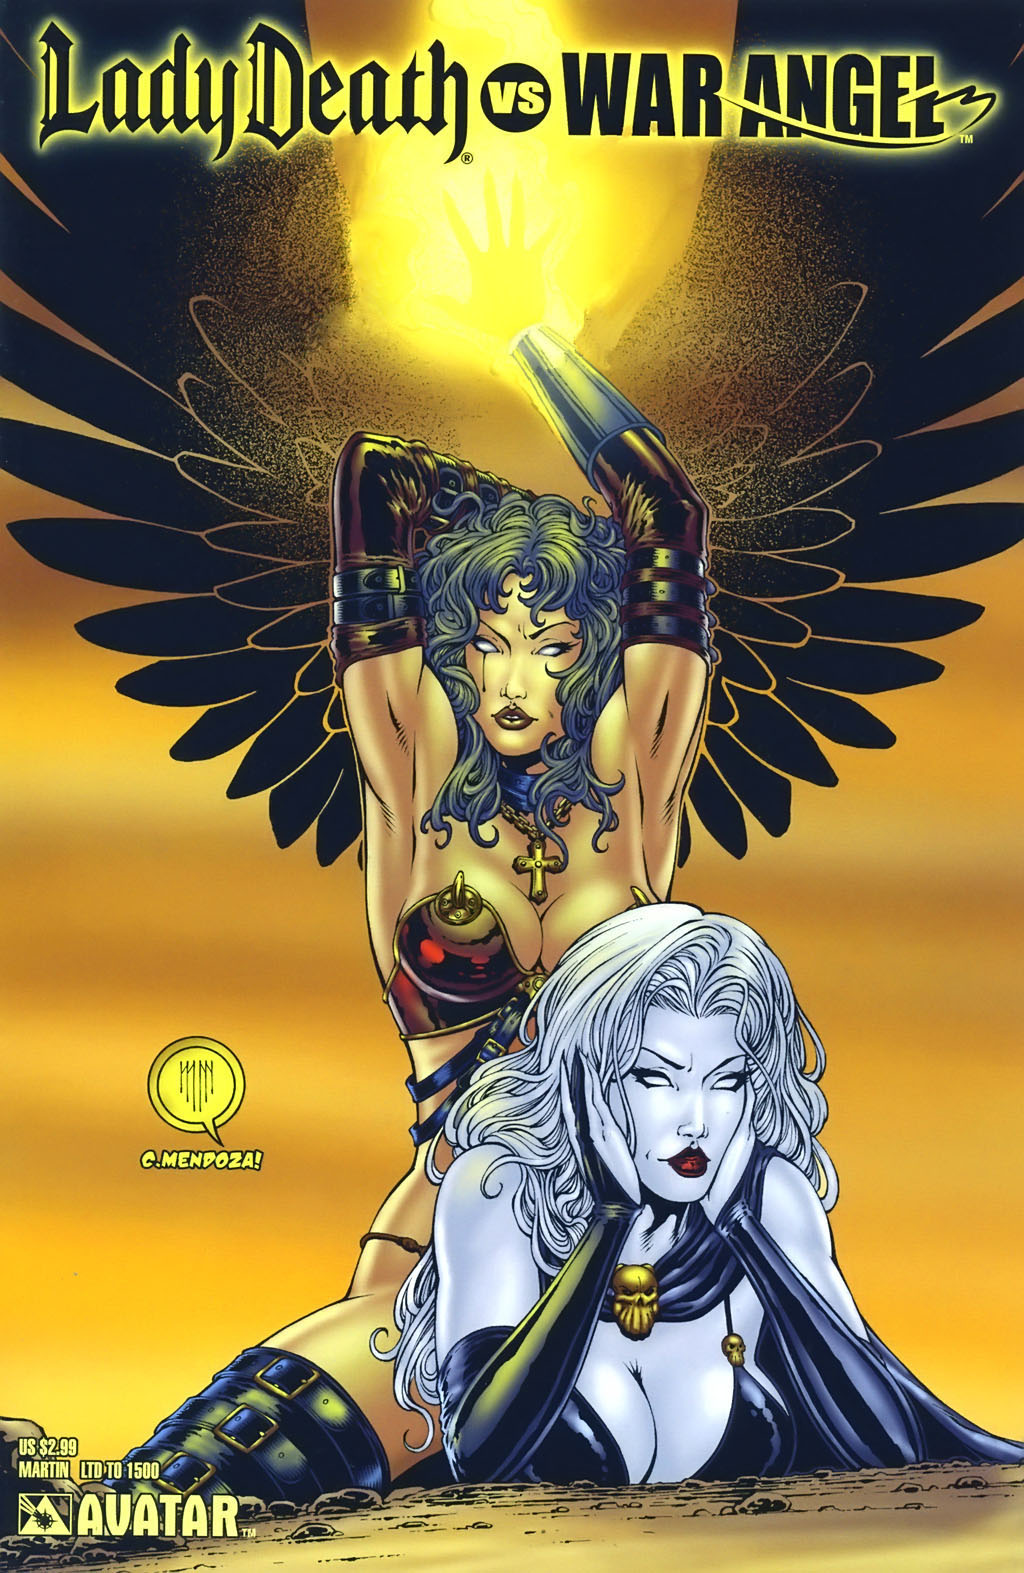 Read online Brian Pulido's Lady Death vs War Angel comic -  Issue # Full - 2